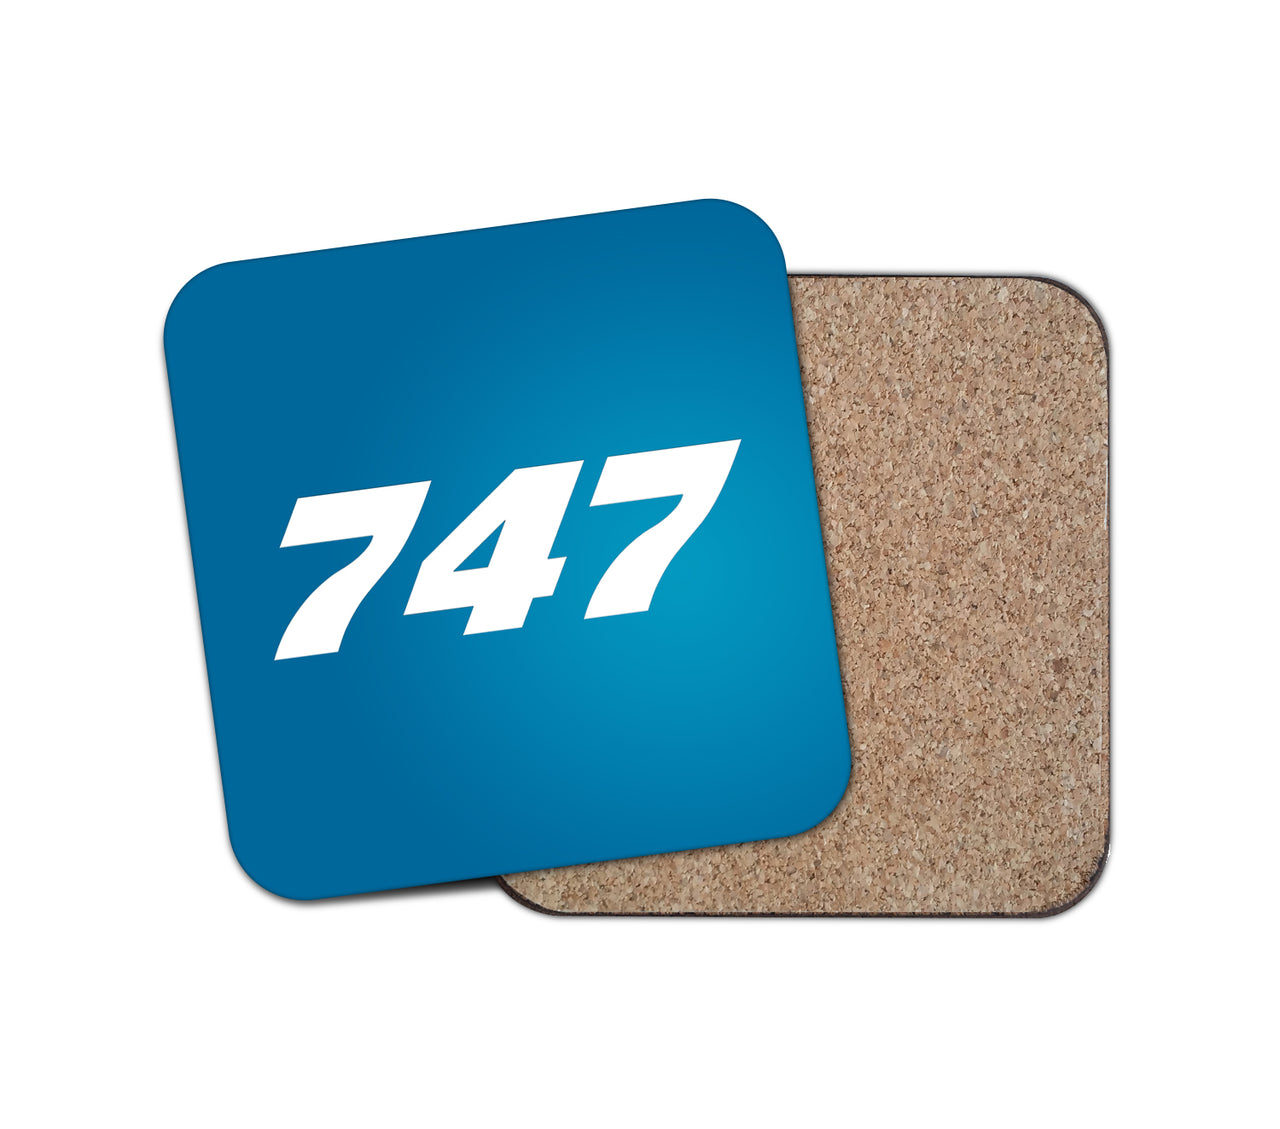 747 Flat Text Designed Coasters